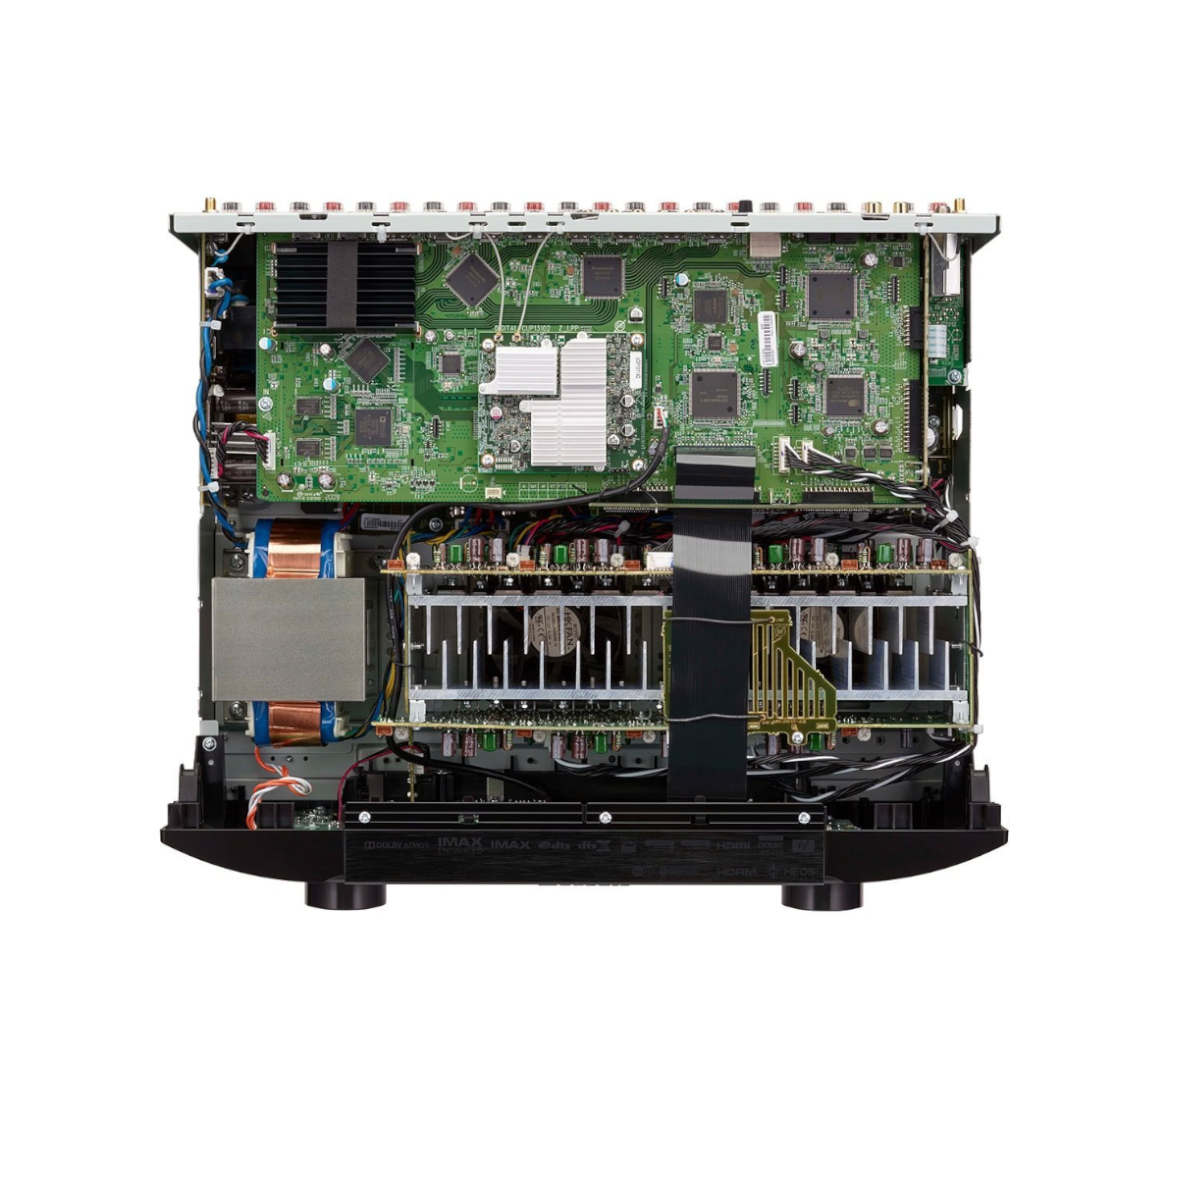 Marantz SR6015 9.2 Ch 8K AV Receiver with 3D Sound and HEOS Built-in